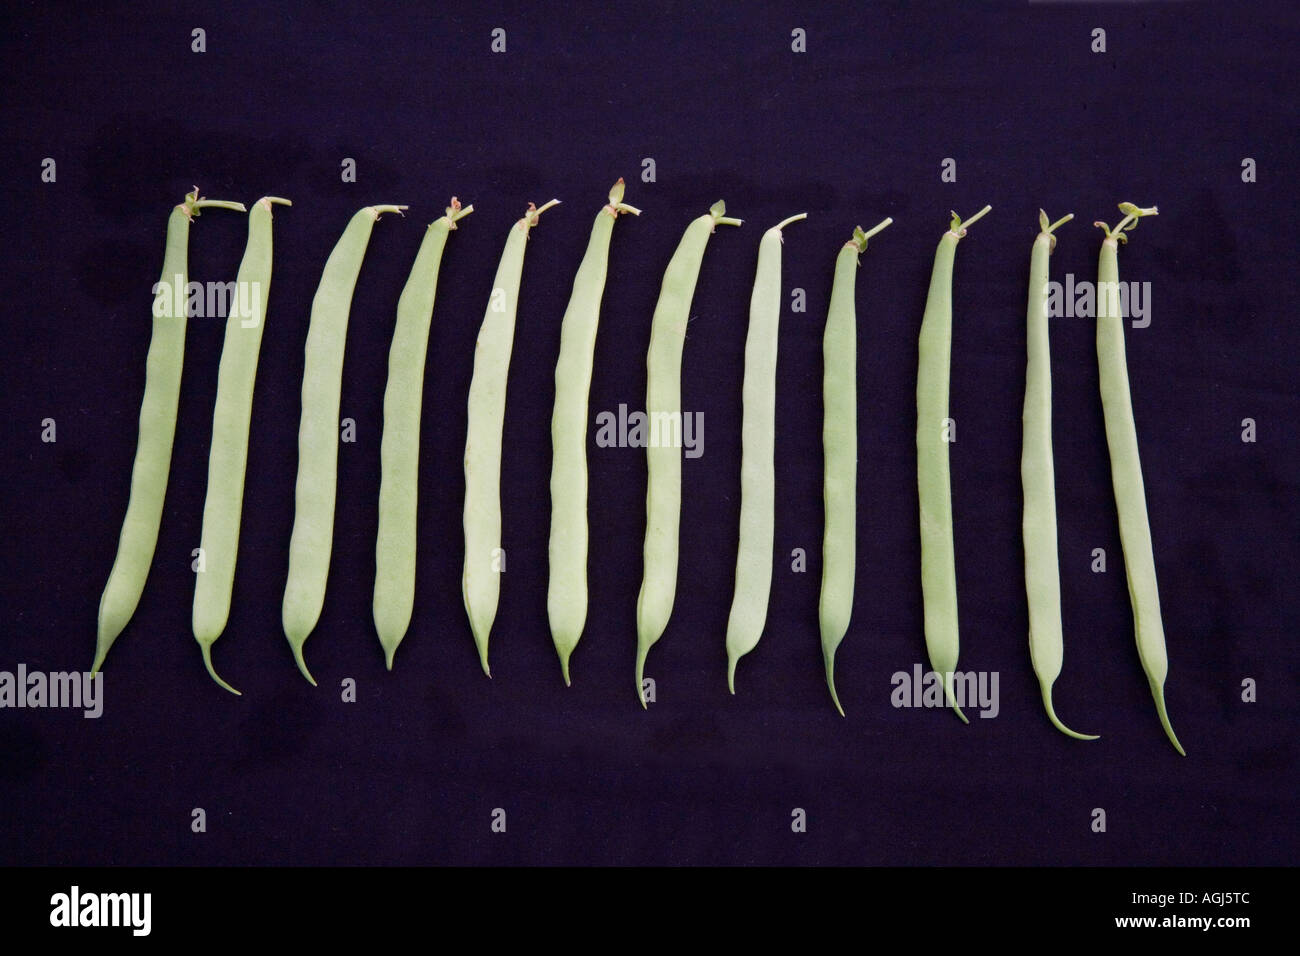 12 twelve dozen Runner beans (Phaseolus coccineus) string beans on black background Stock Photo